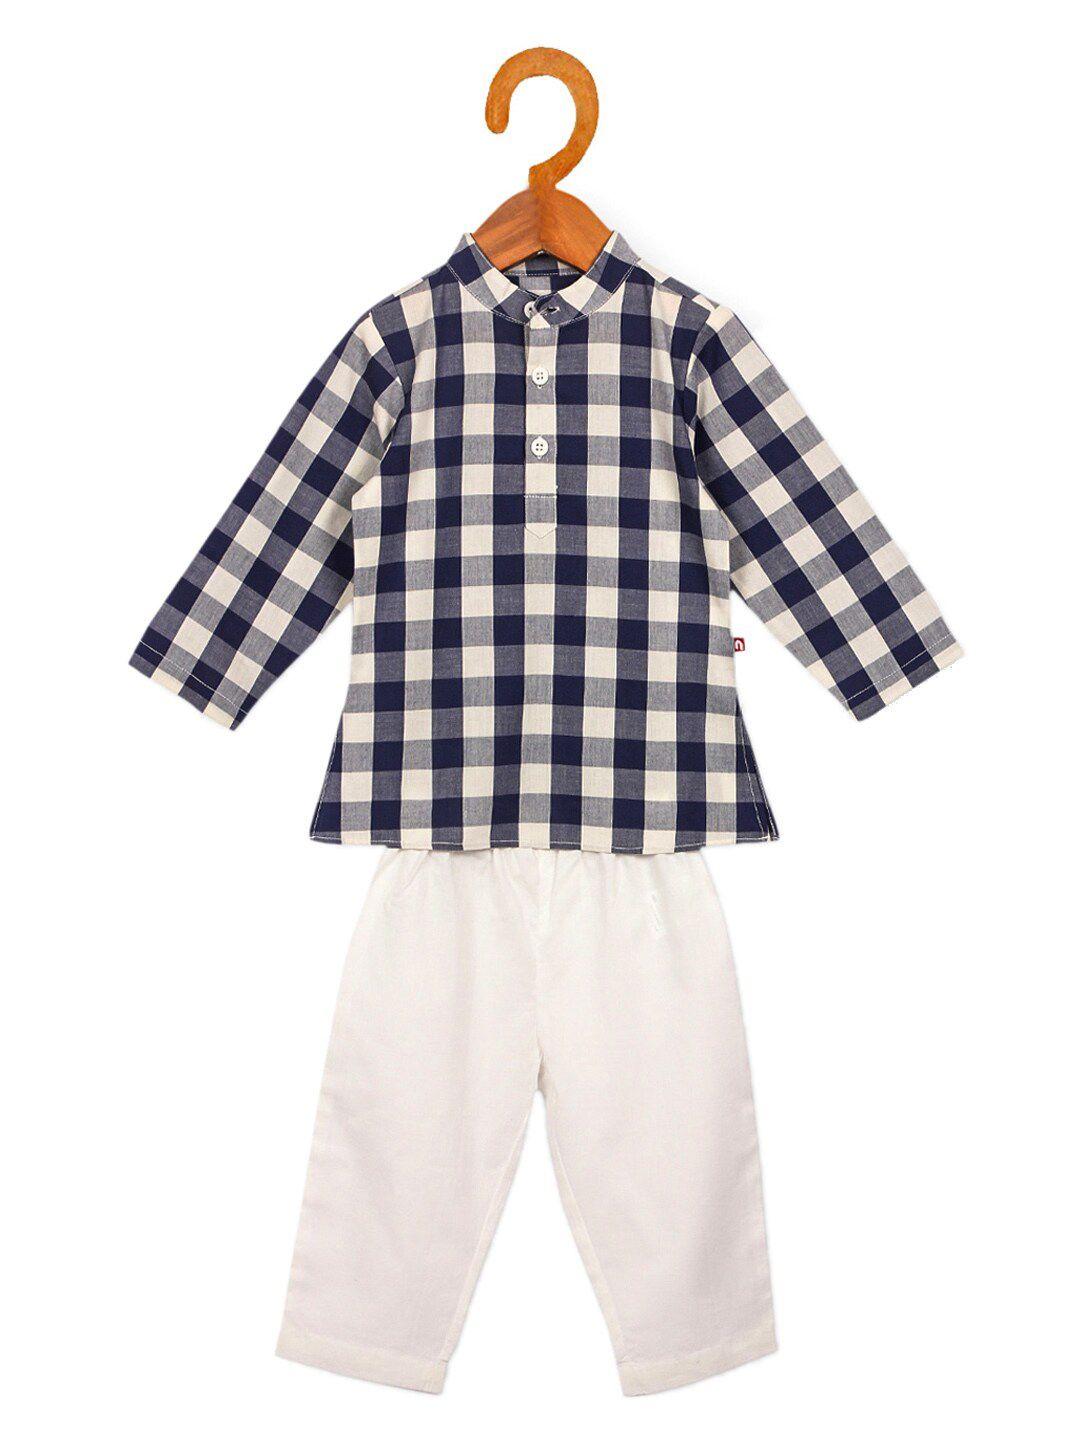 nino bambino boys white & blue checked pyjamas